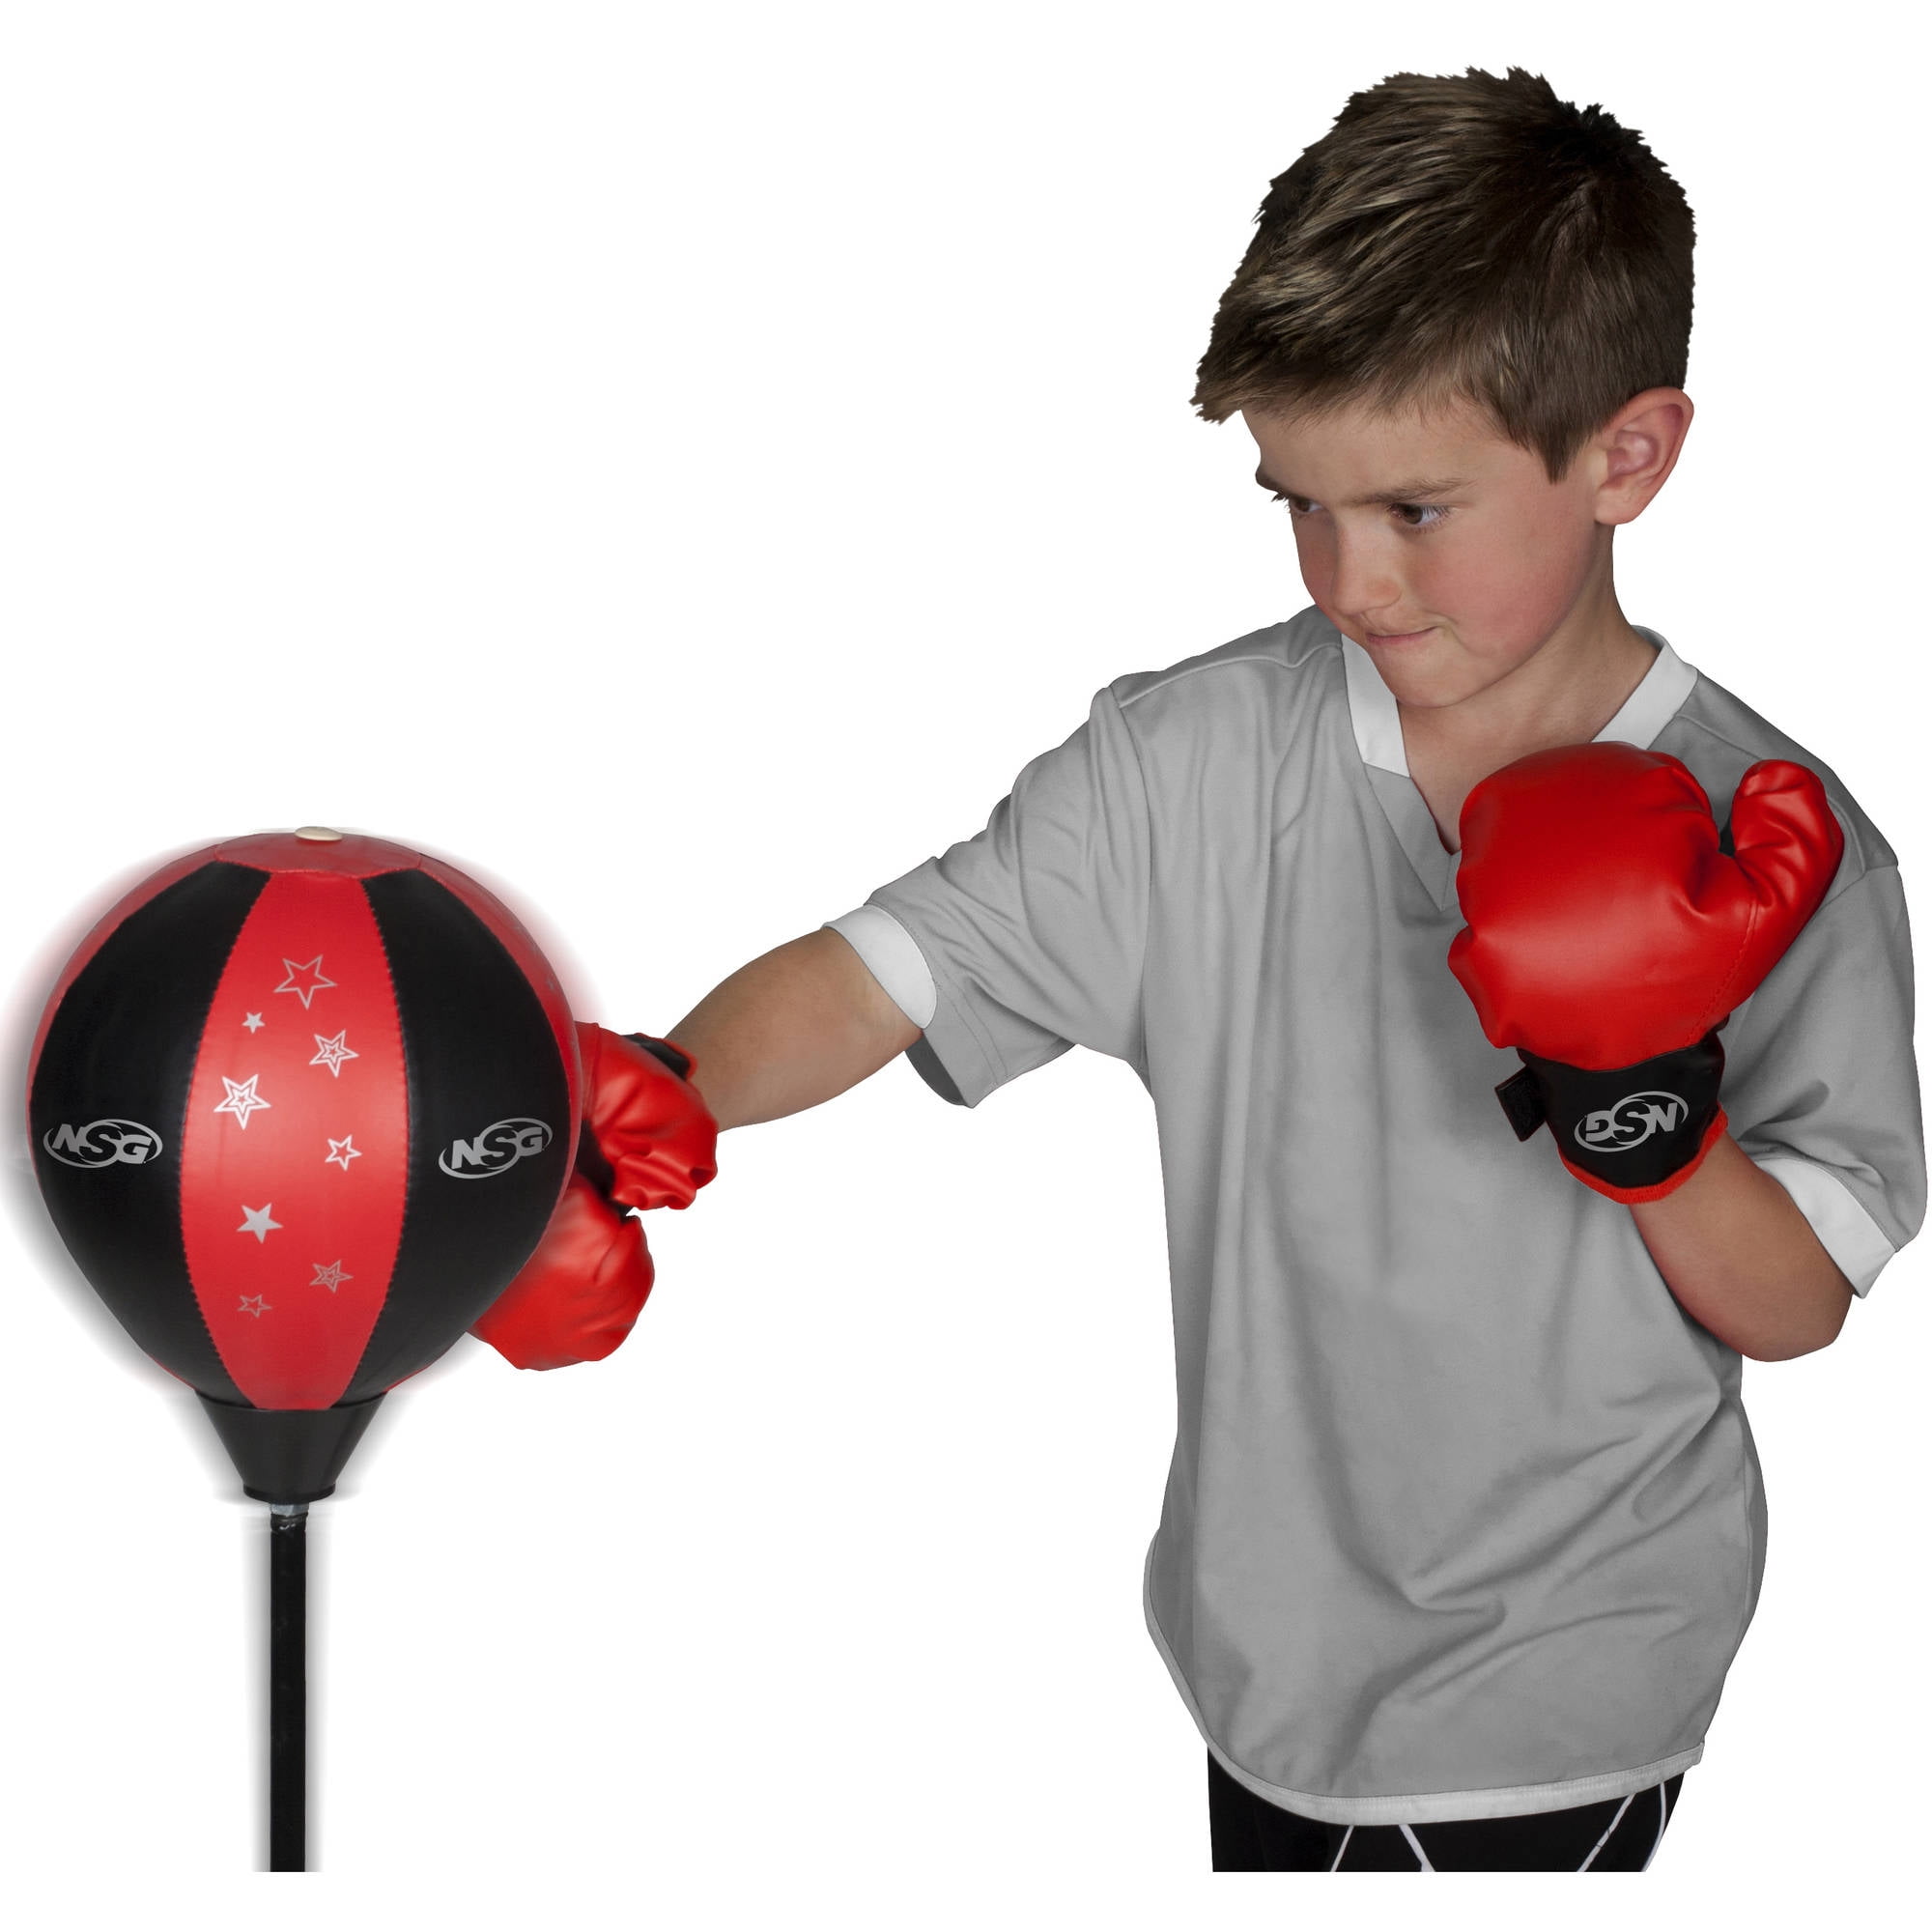 NSG Punching Bag and Boxing Gloves Set - wcy.wat.edu.pl - wcy.wat.edu.pl